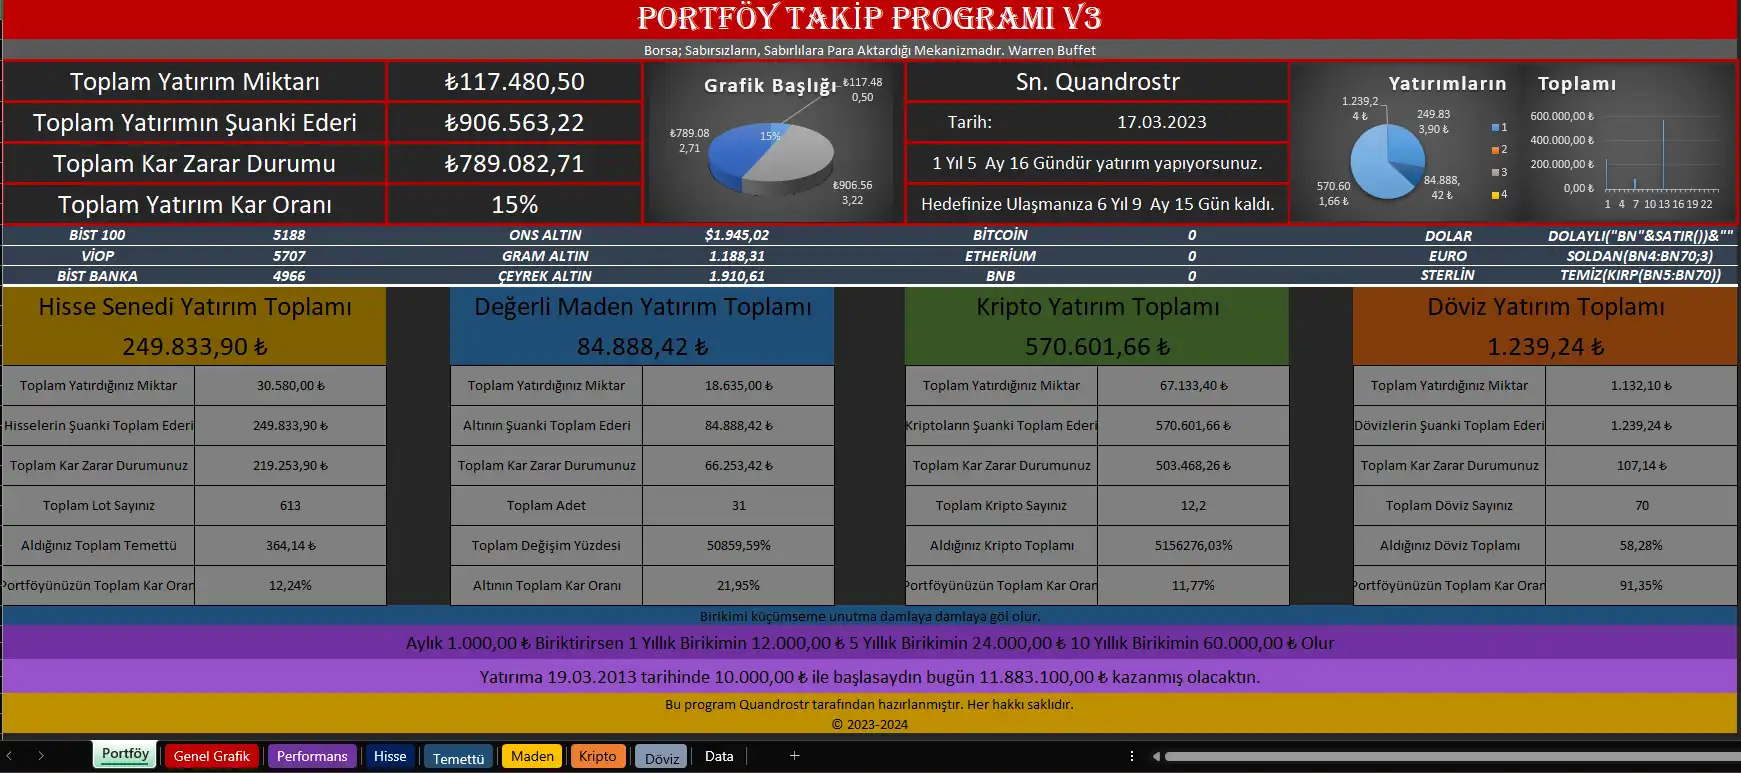 Download webtool of webapp MaviCin Portföy Tachip Programı